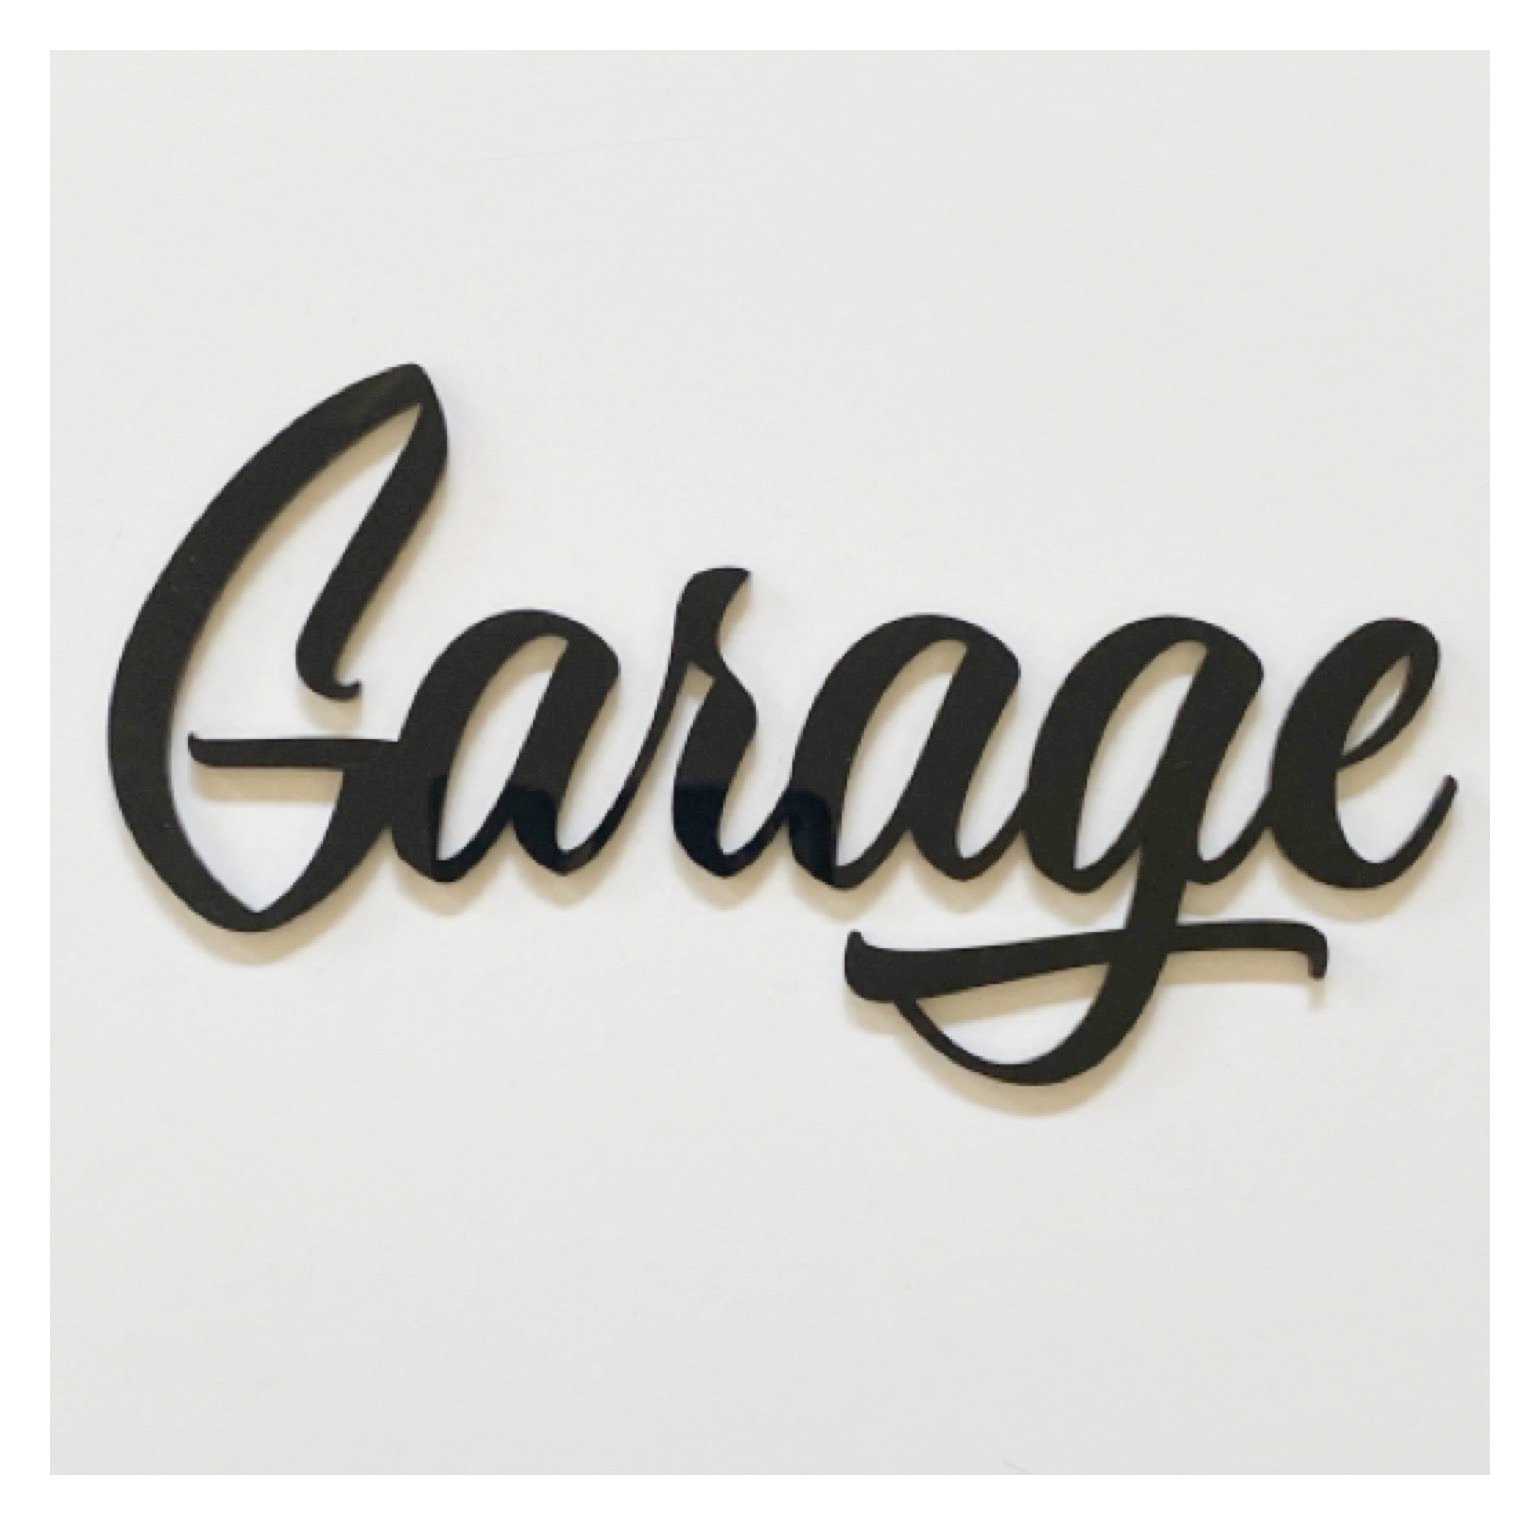 Garage Door Word Acrylic Wall Art Vintage